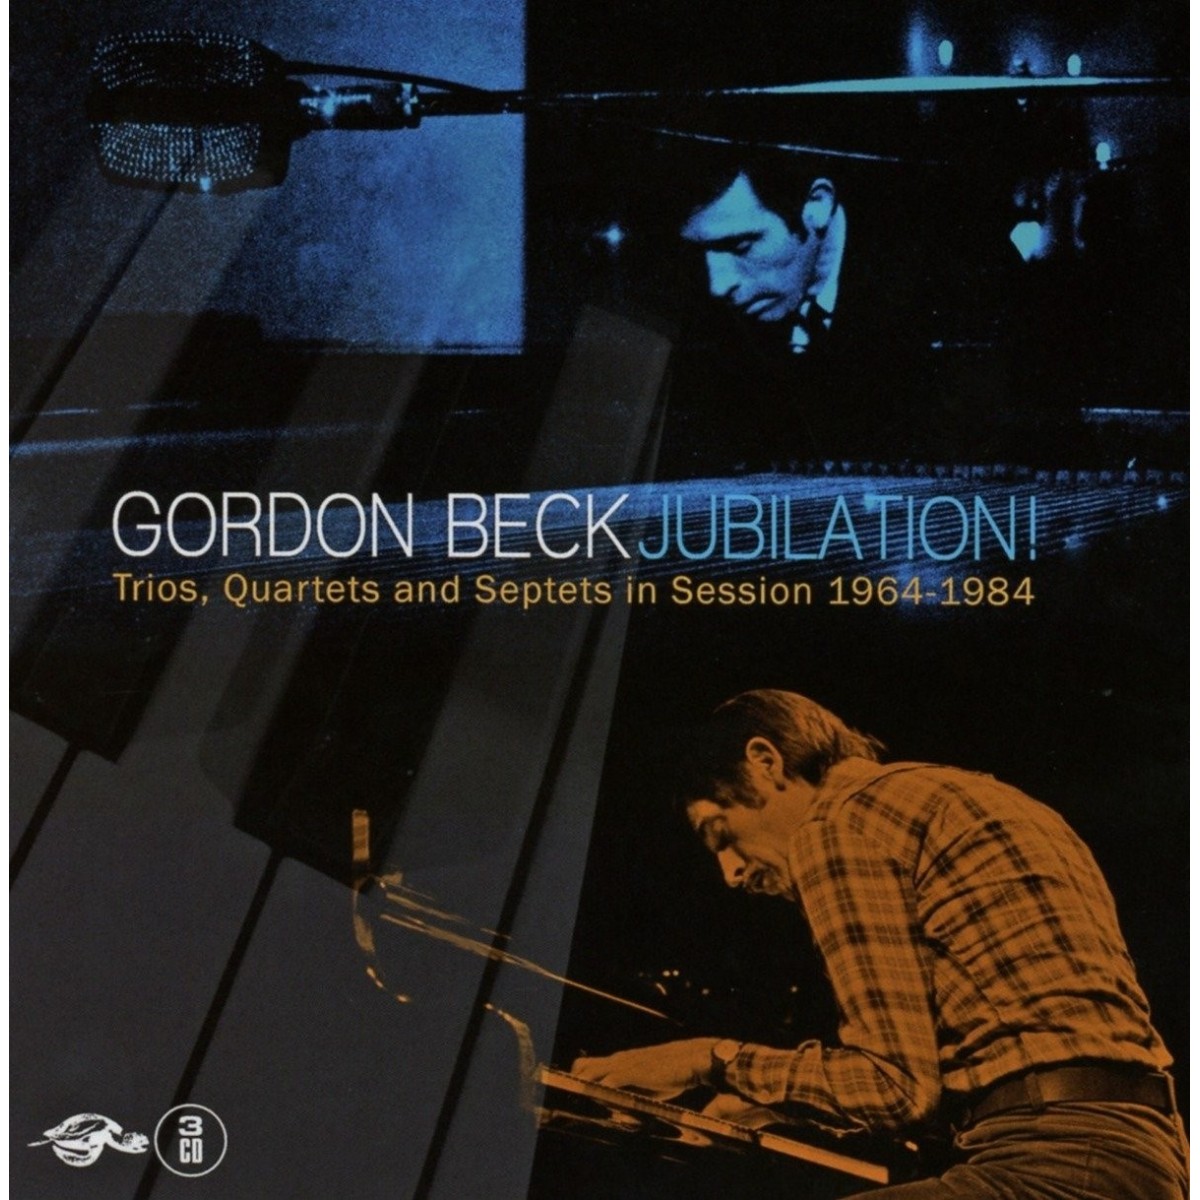 Gordon Beck - Jubilation! Trios, Quartets And Septets In Session 1964-1984